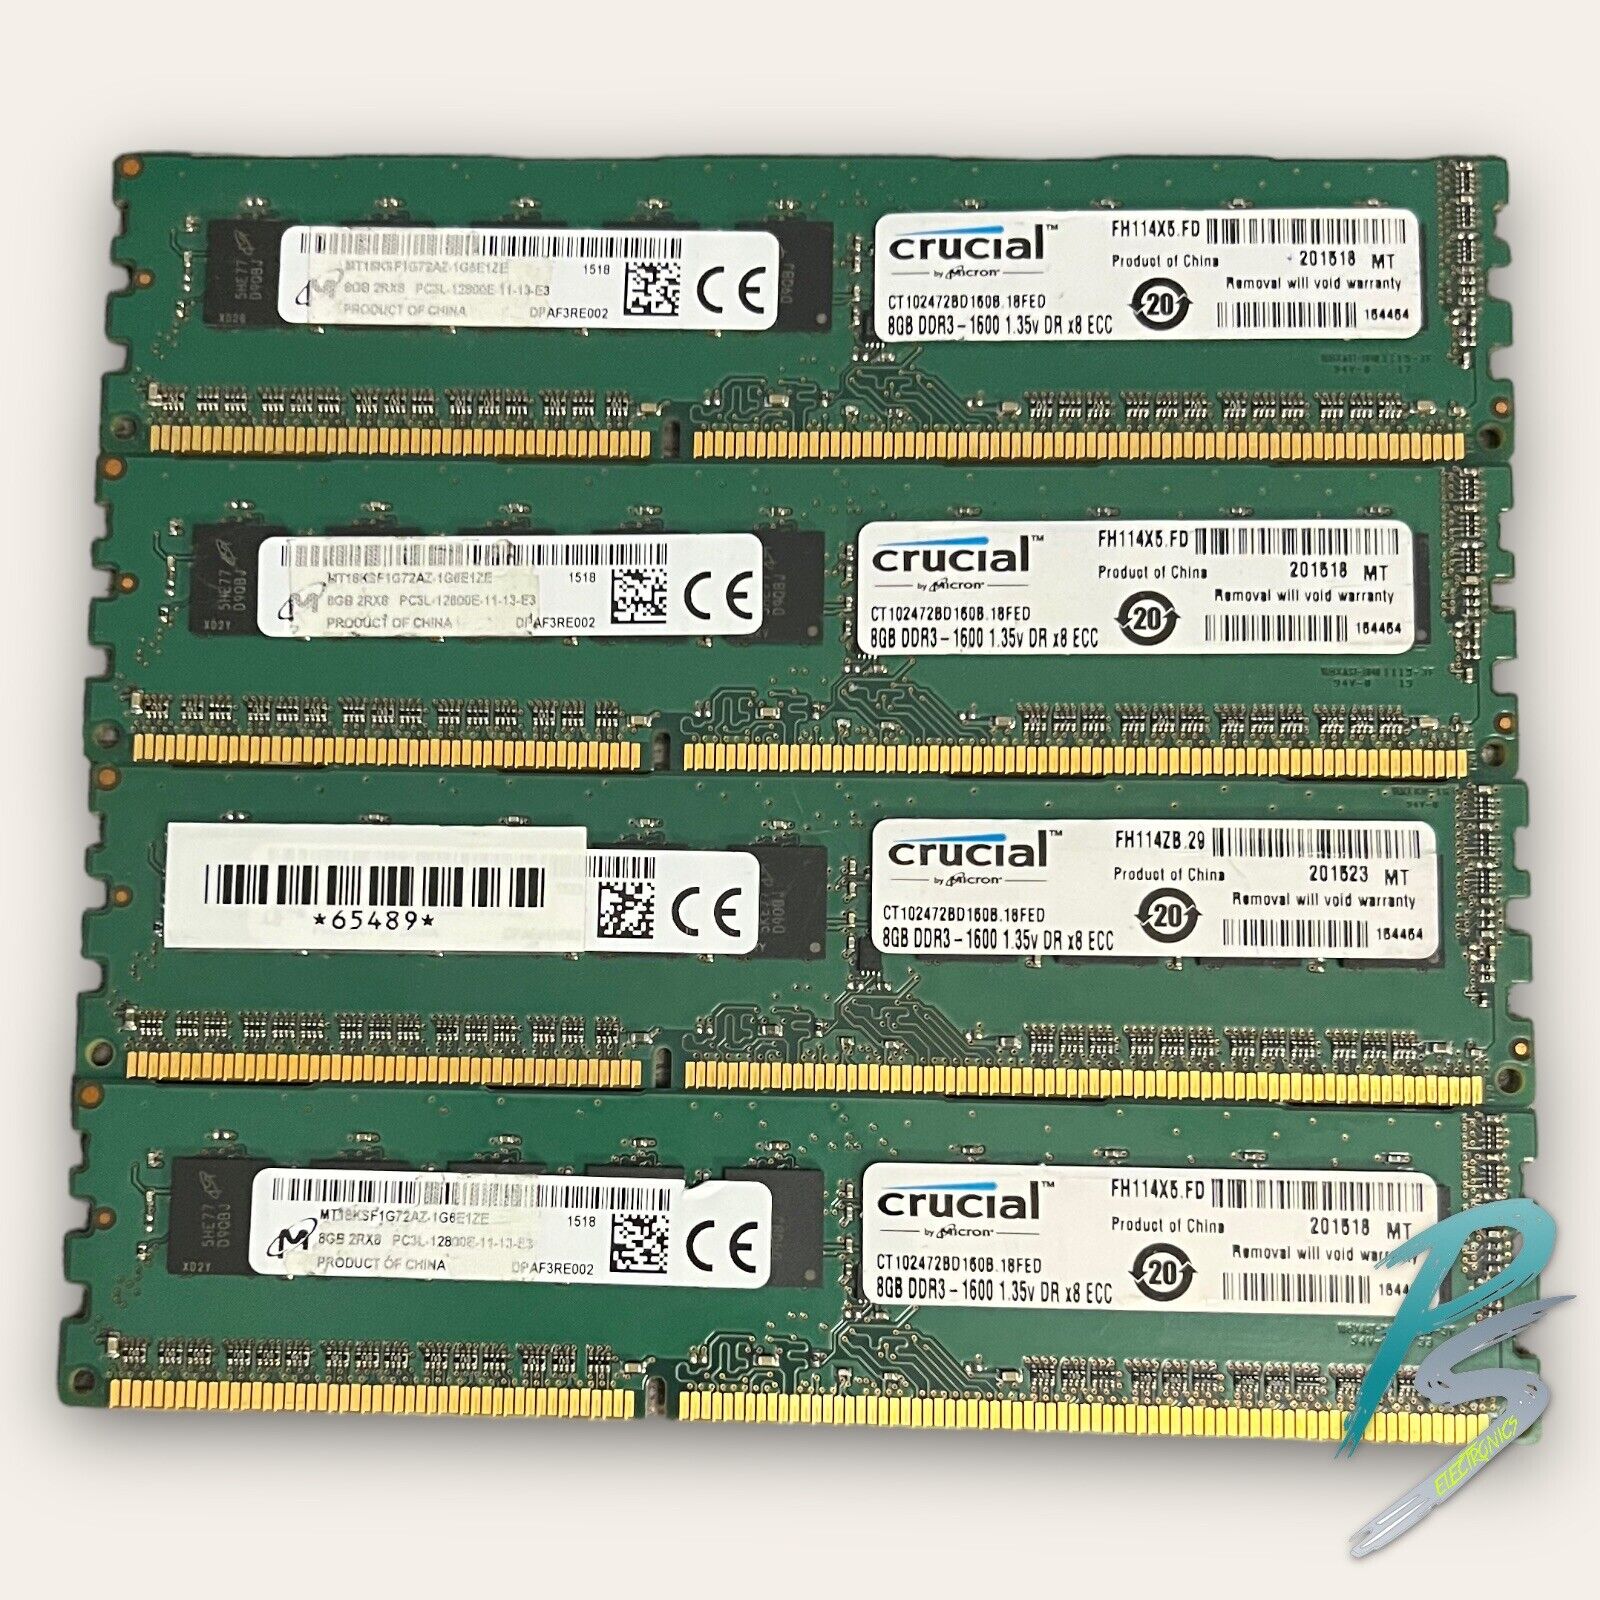 Crucial Micron 32GB (4x8GB) PC3L-12800E ECC UDIMM DDR3  Server Memory RAM